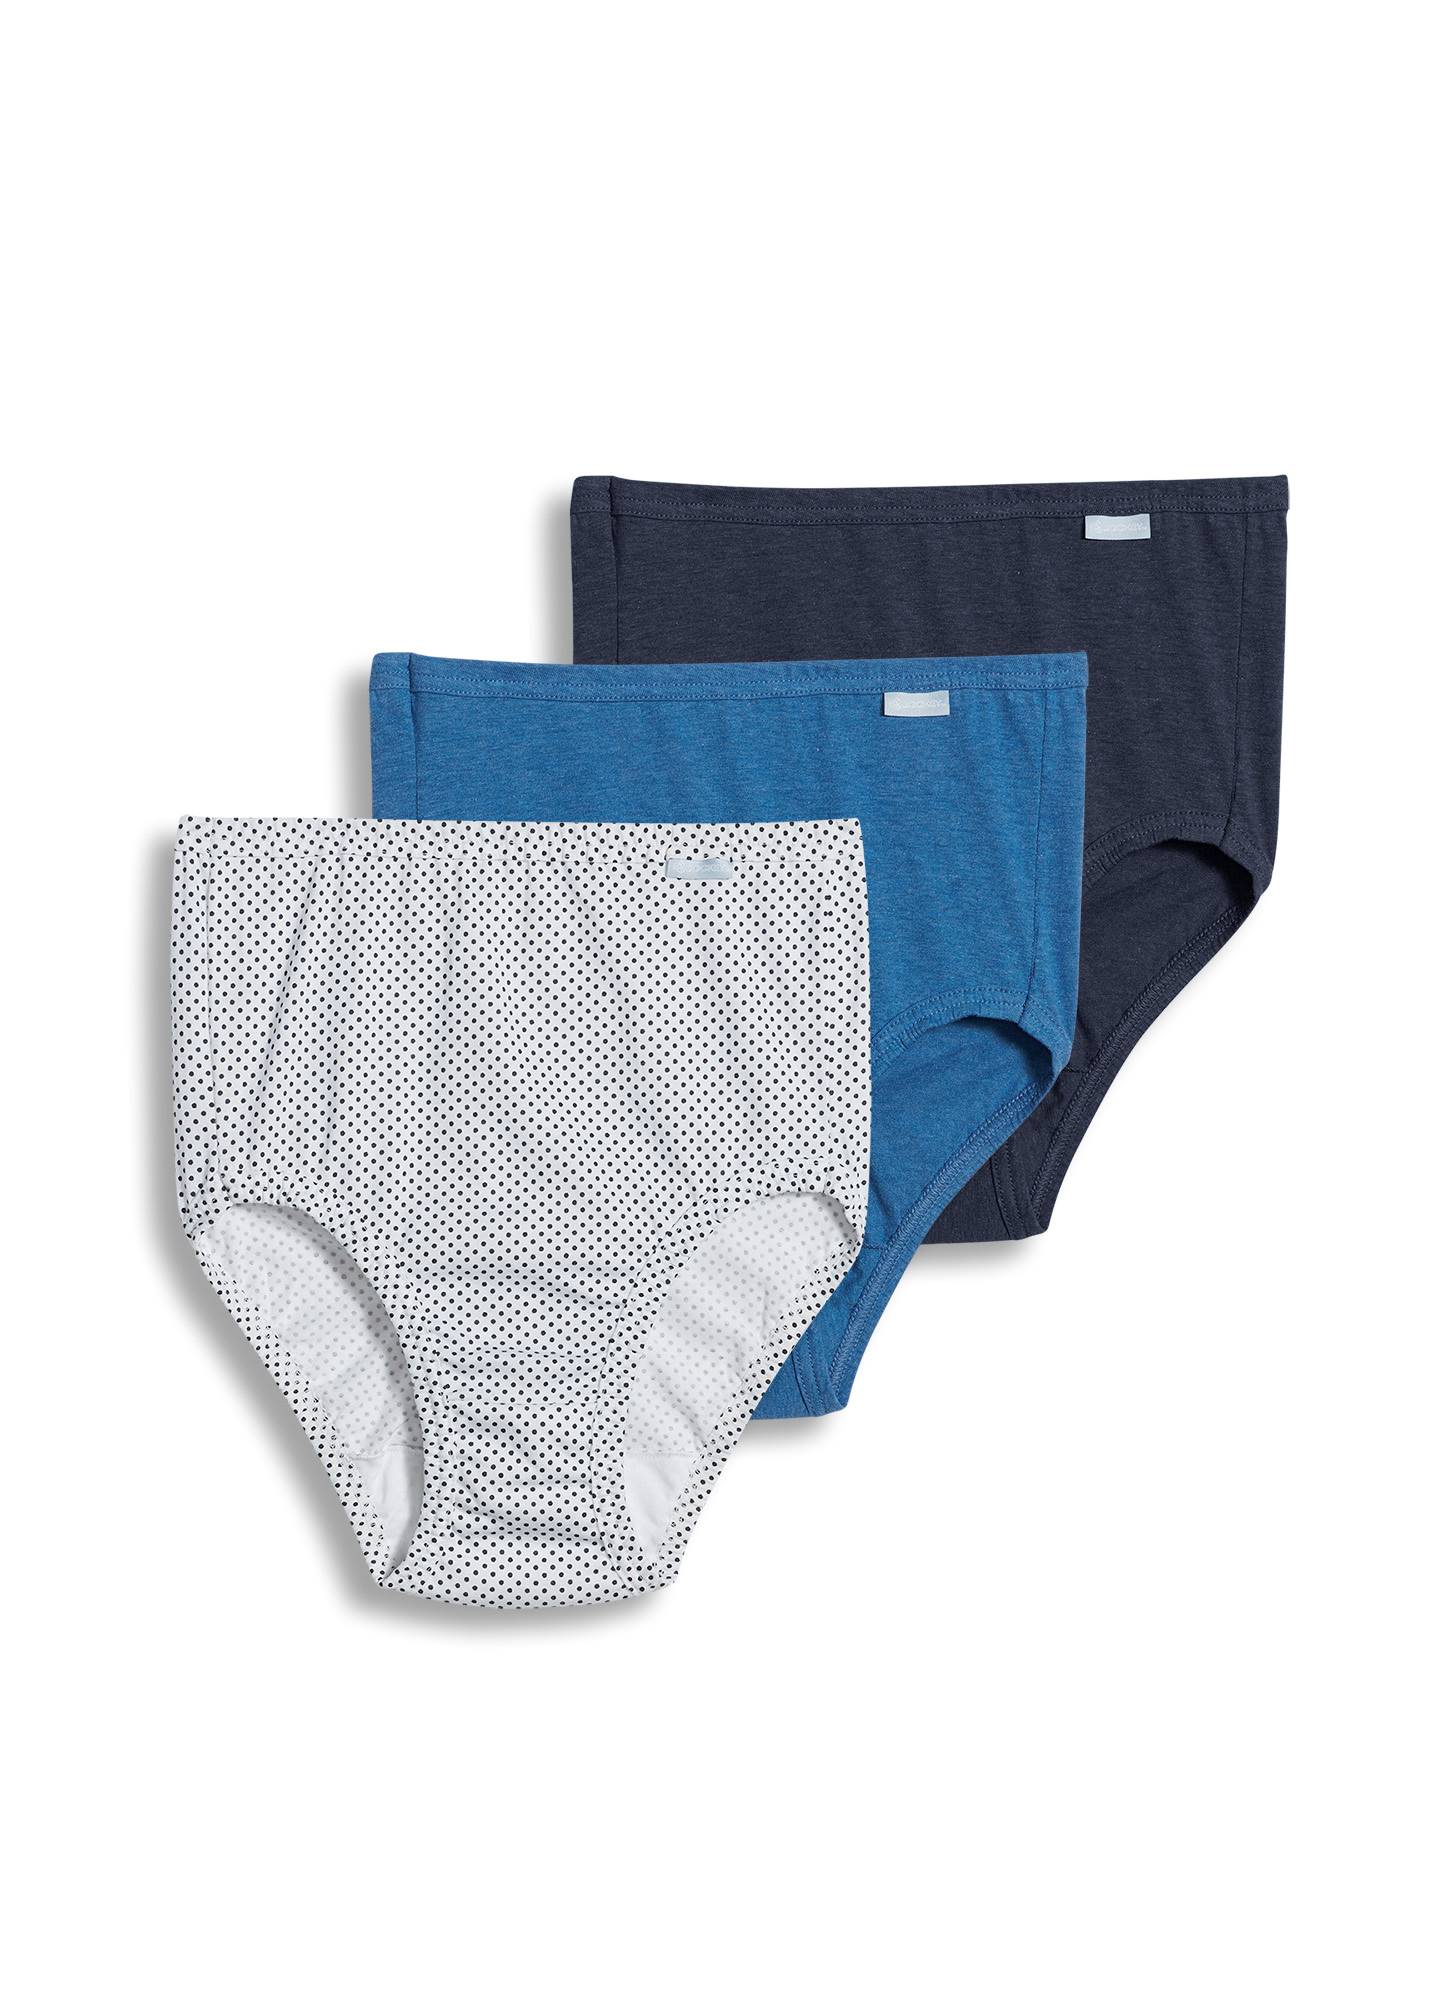 Women's Jockey 3-Pack Briefs (Jewel Teal) 100% Cotton Comfort Classic  Underwear